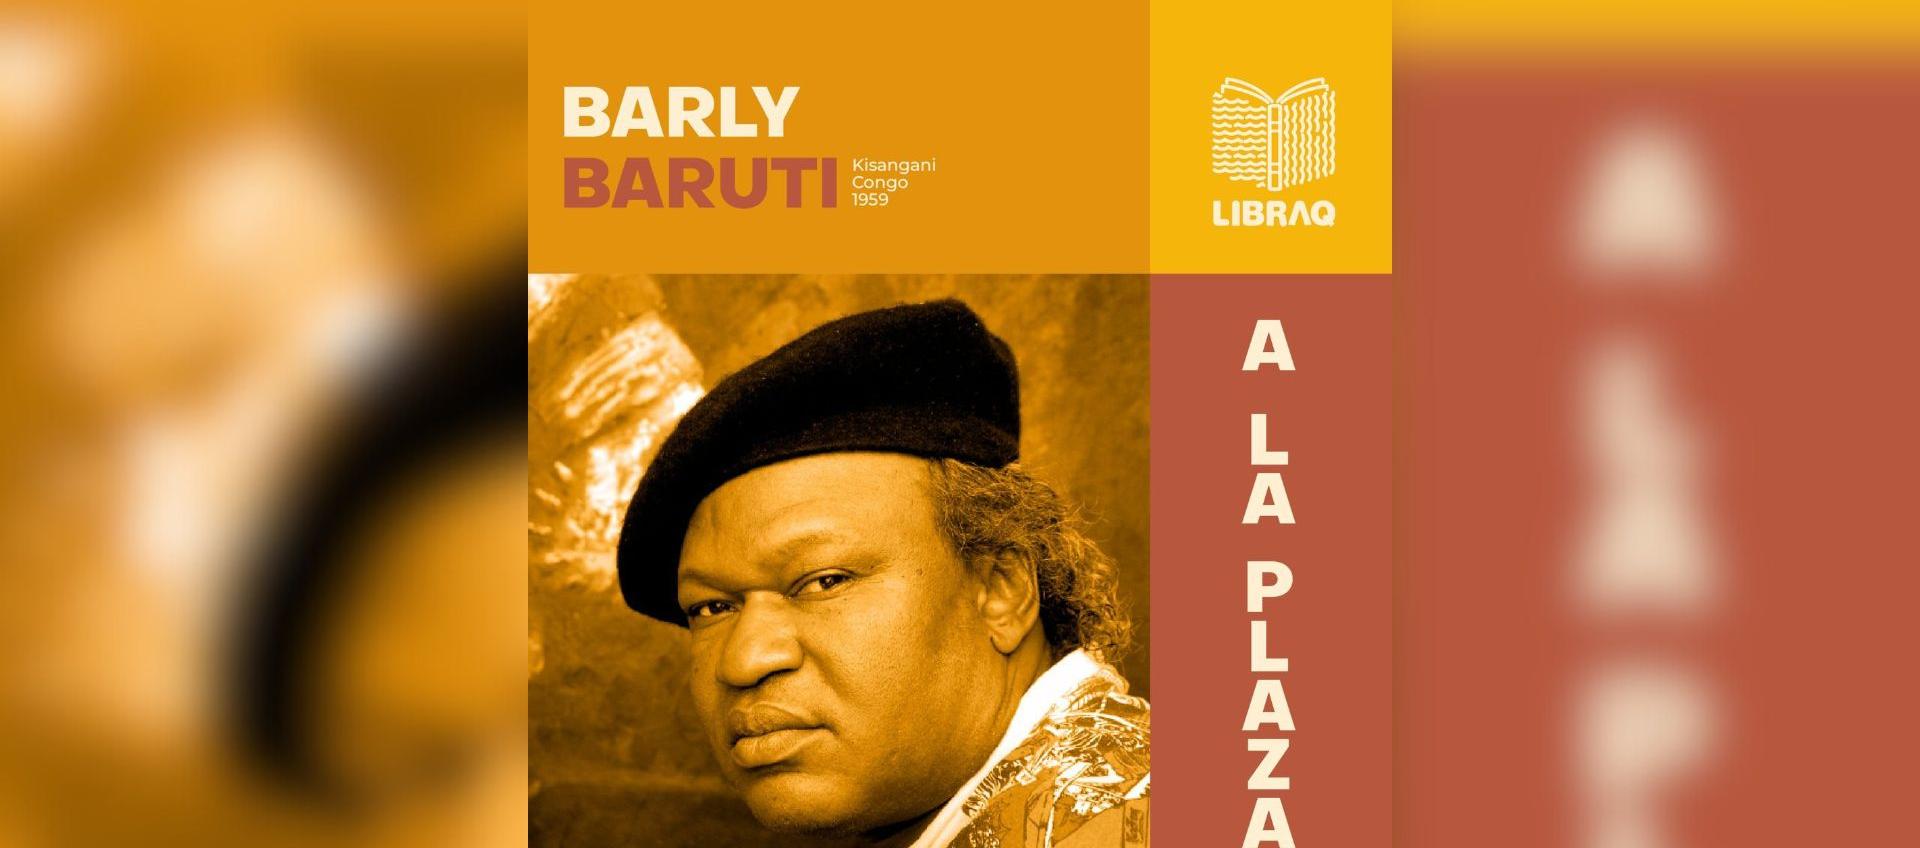 Barly Baruti en 'Libraq a la Plaza'